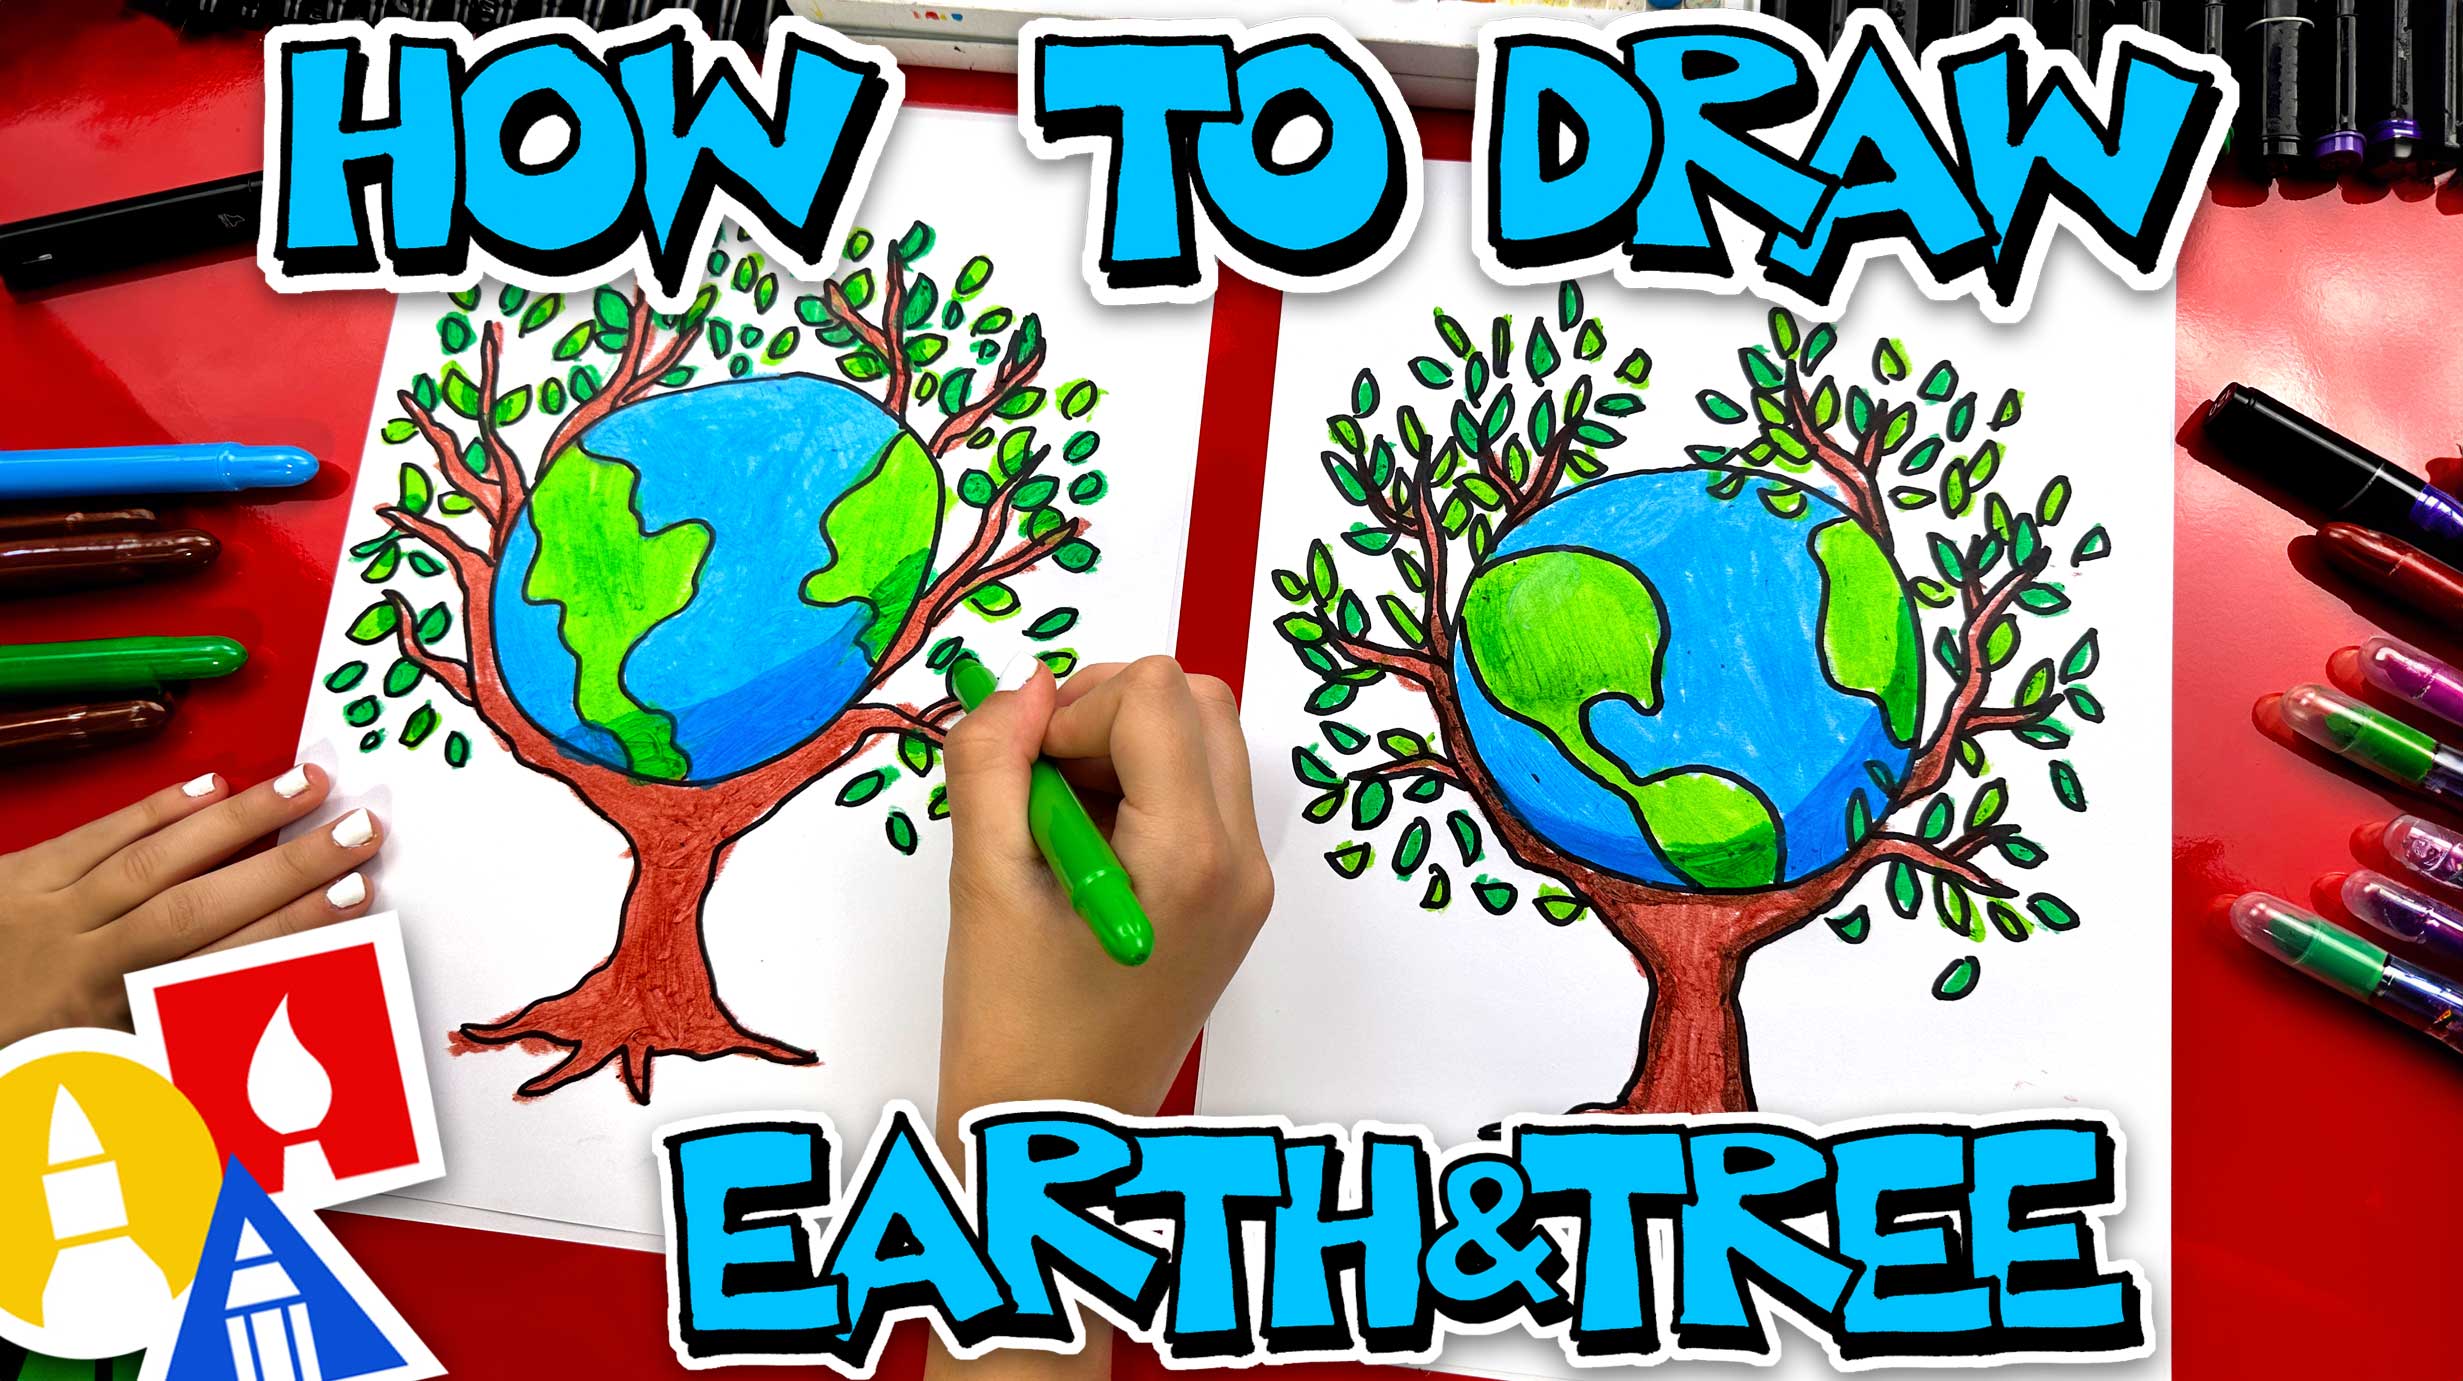 Easy Tree Drawing for Kids - PRB ARTS-saigonsouth.com.vn